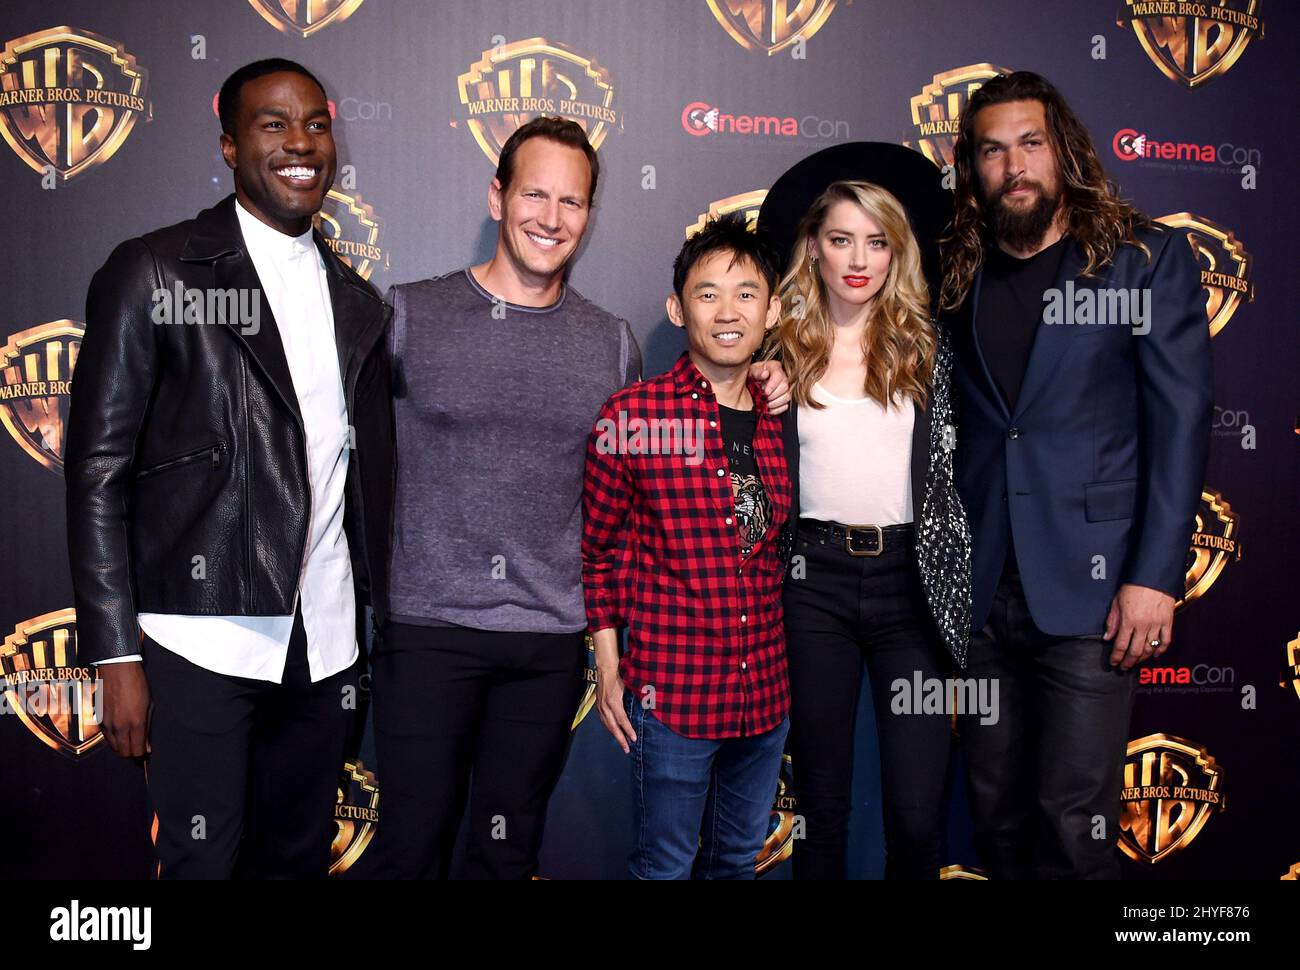 Yahya Abdul-Mateen II, Patrick Wilson, James Wan, Amber Heard an attending Warner Bros at CinemaCon 2018 in Las Vegas Stock Photo